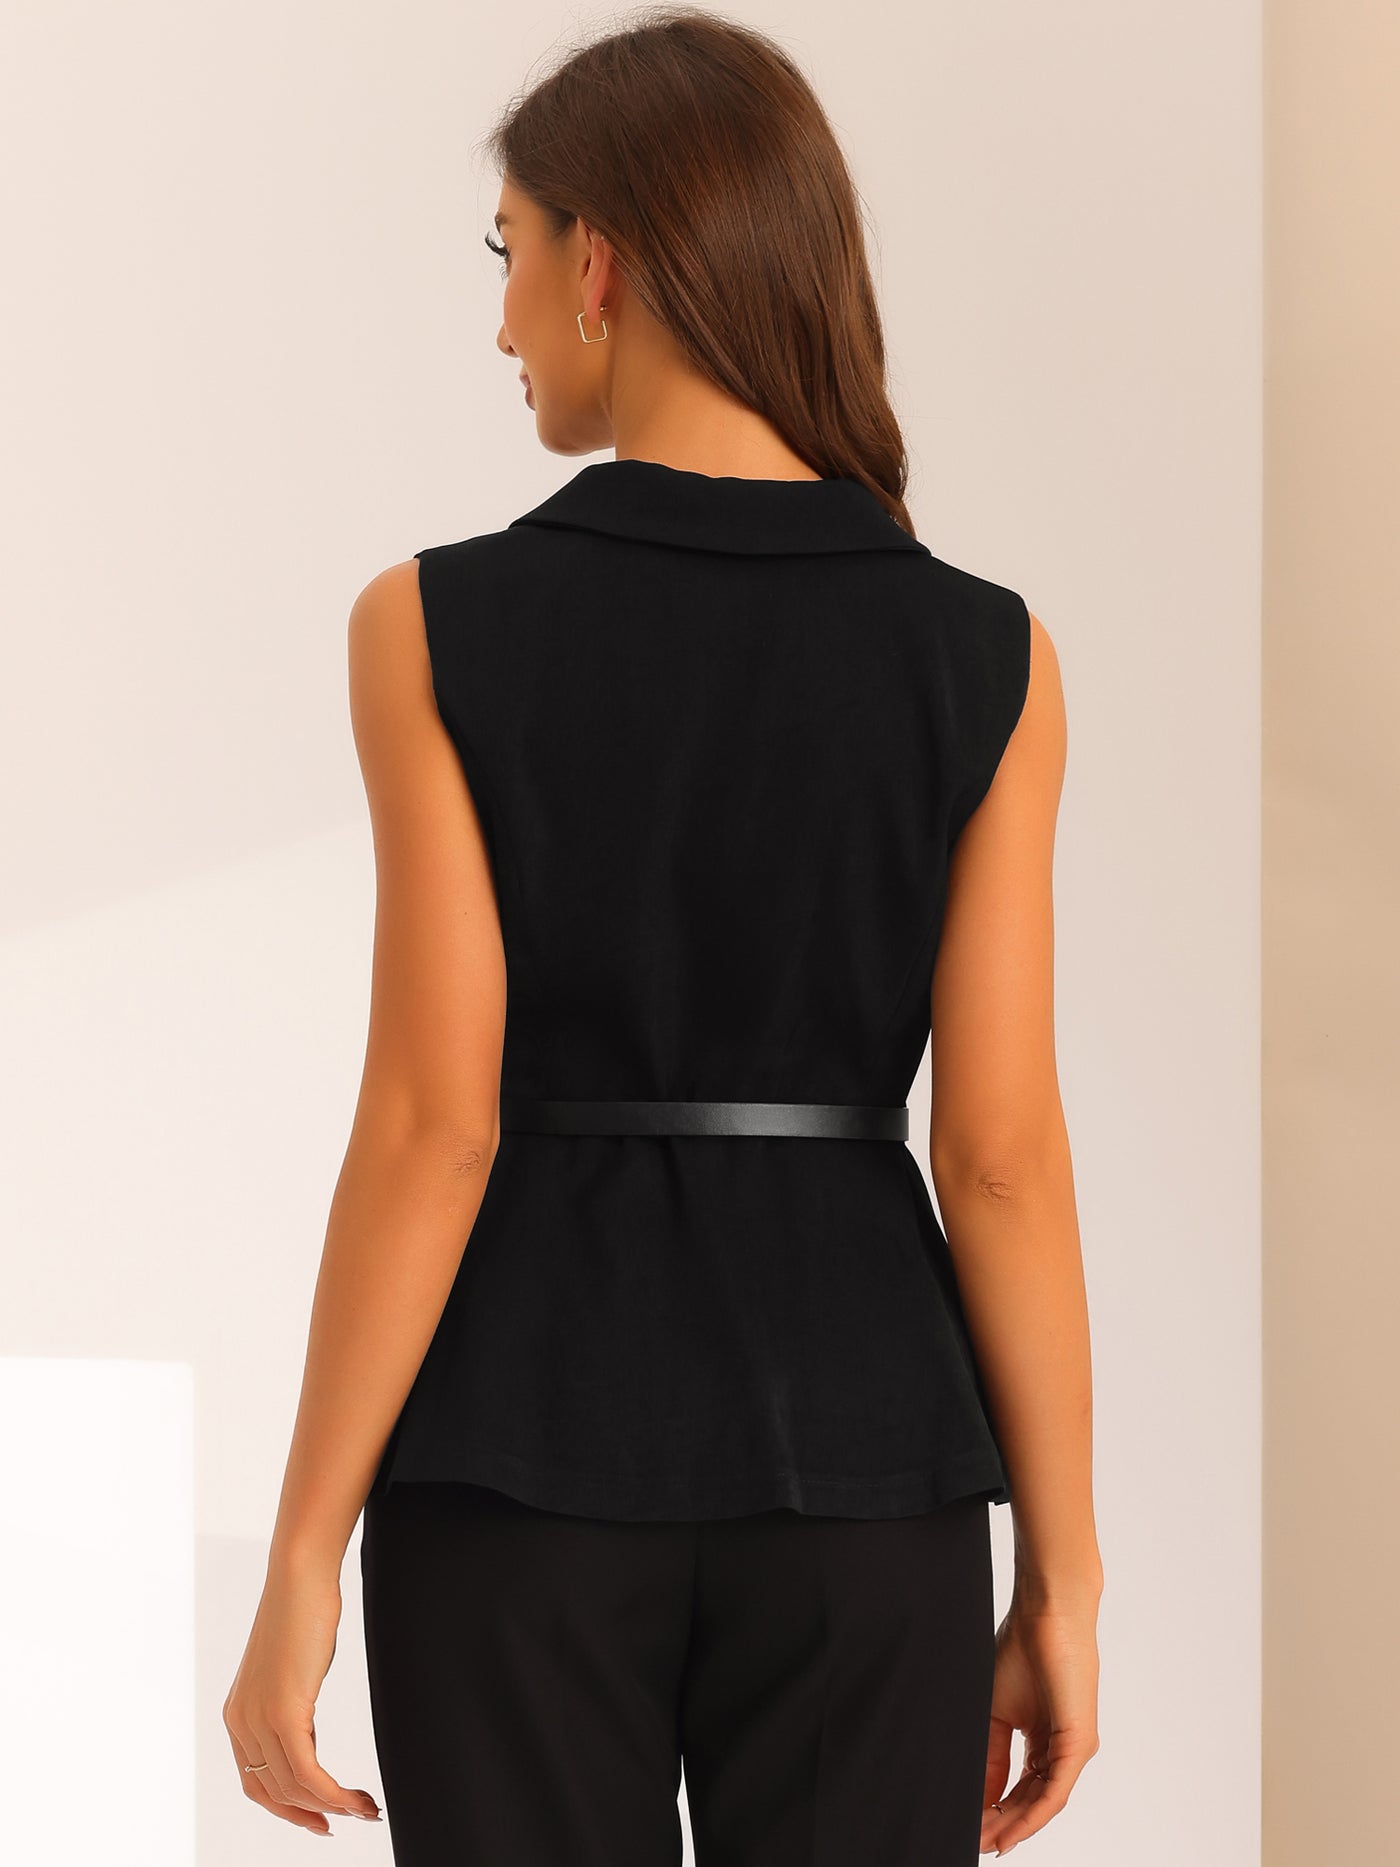 Allegra K Office Blazer Vest for Women's Lapel Collar Button Down Belted Sleeveless Jacket